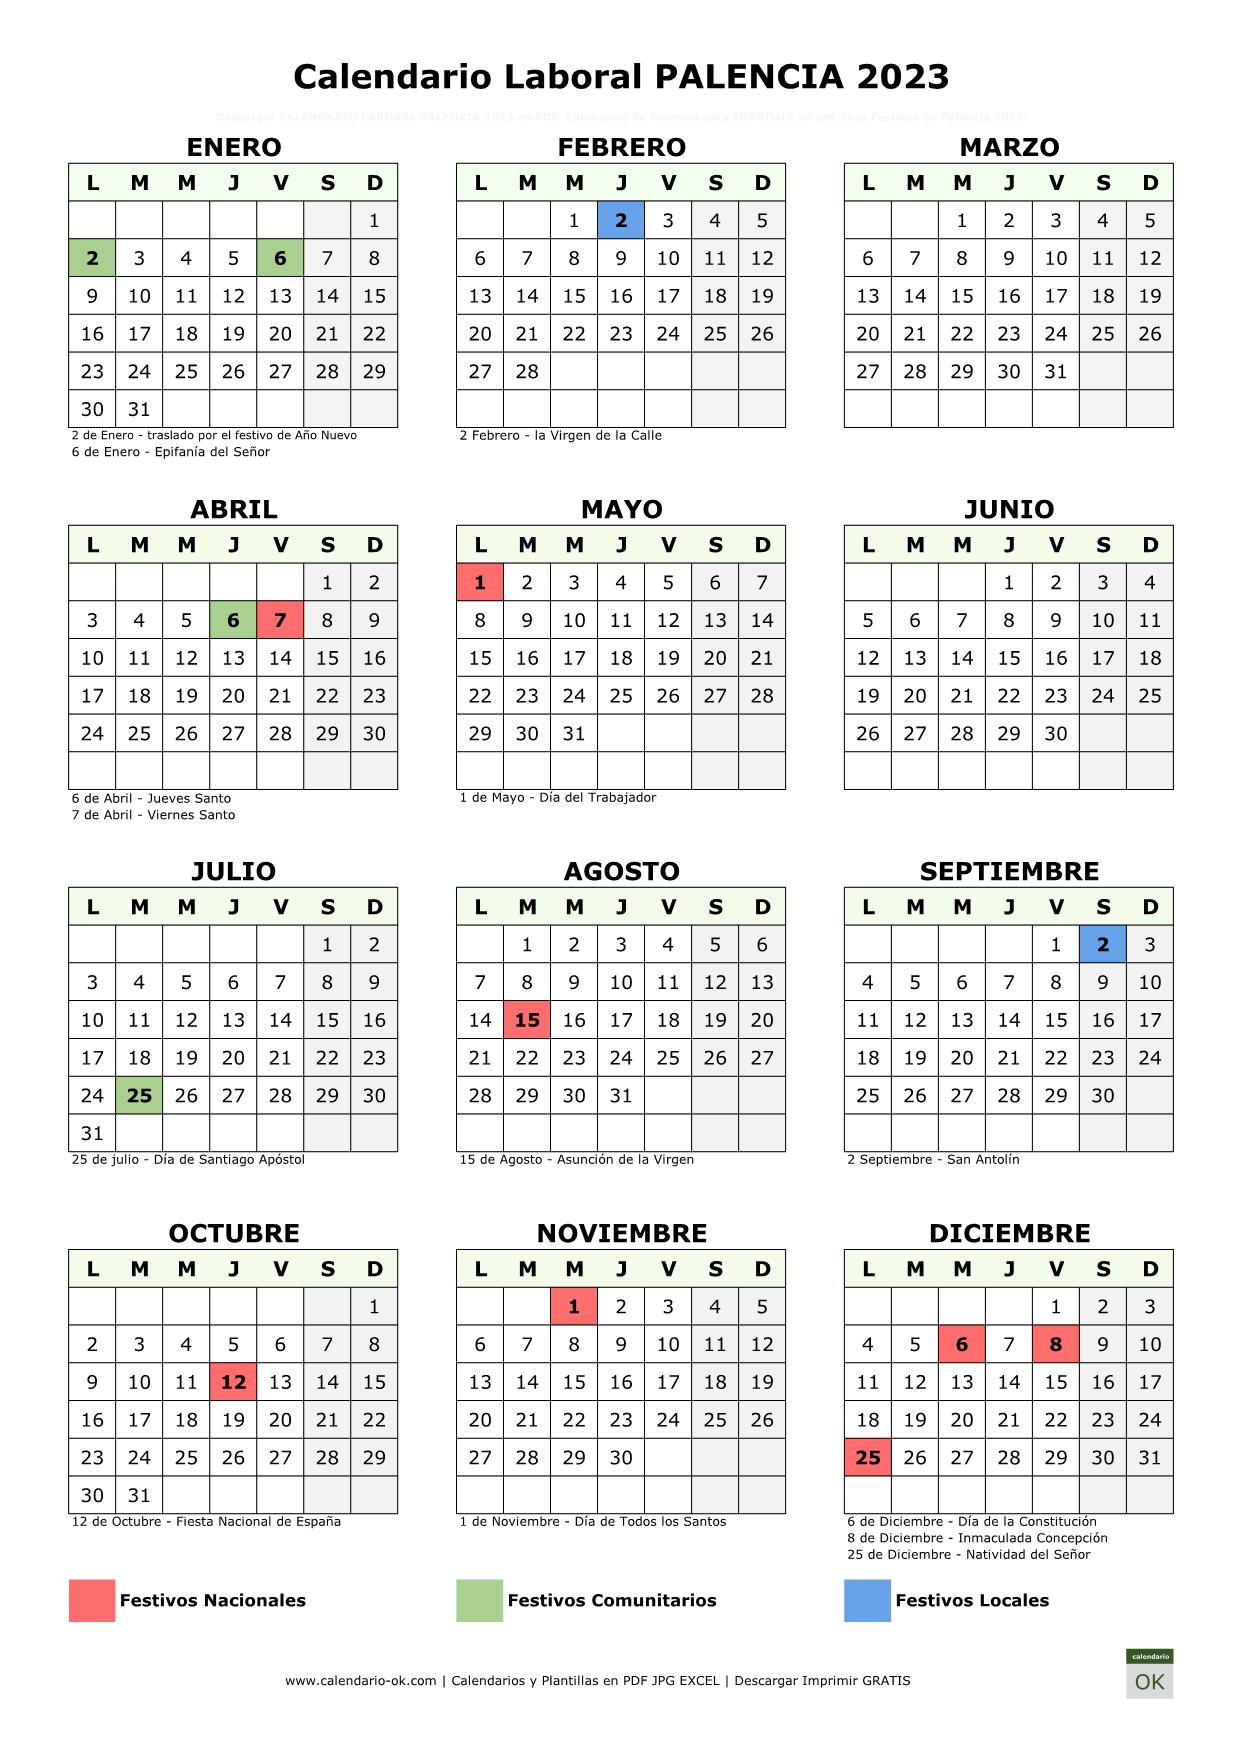 Calendario Laboral Palencia 2023 vertical